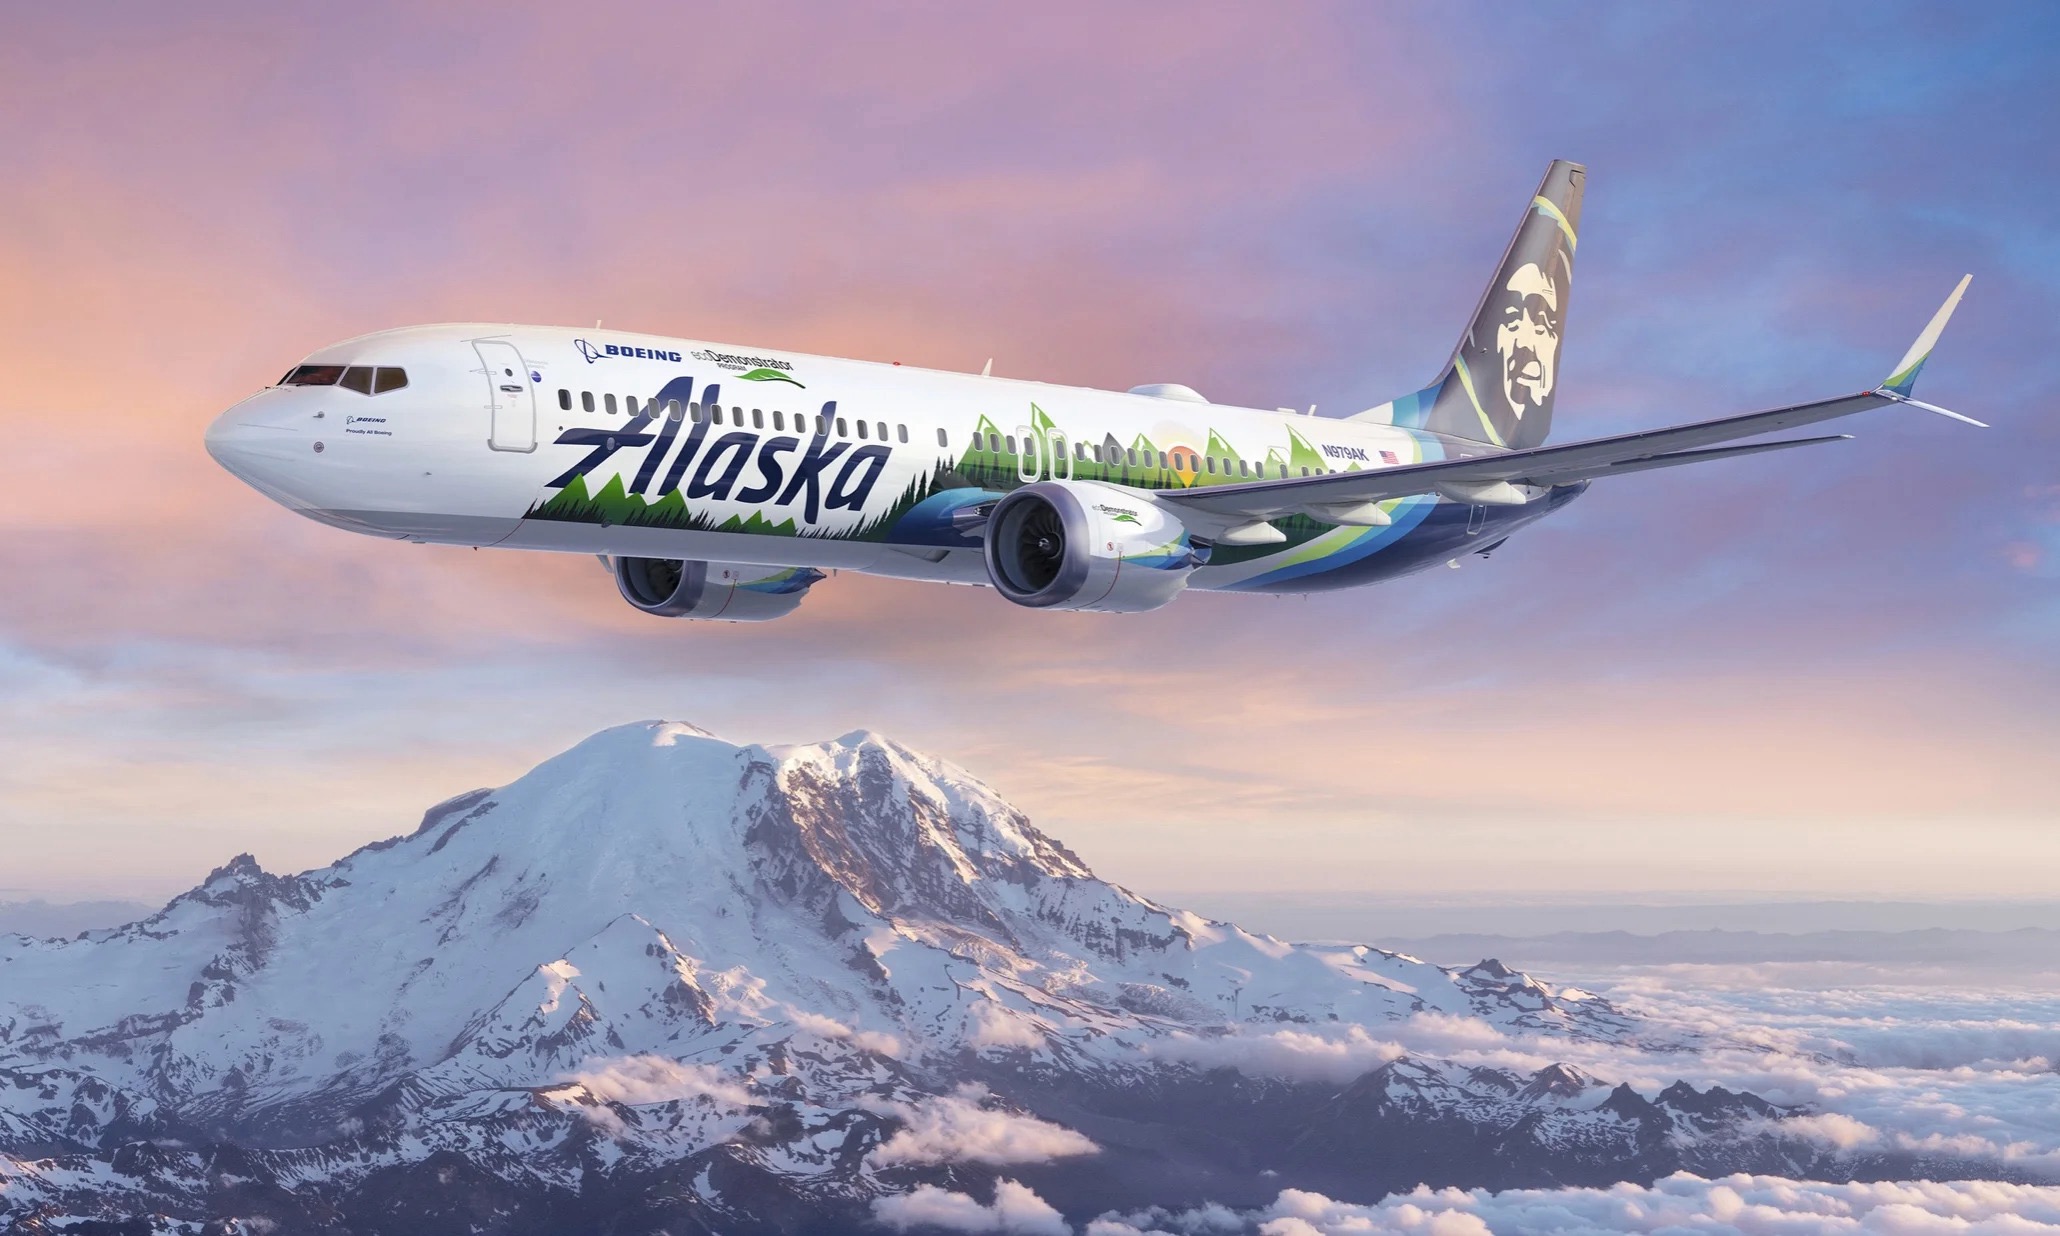 Featured image for “BILT Adds A Surprise Transfer Partner In Alaska Airlines”